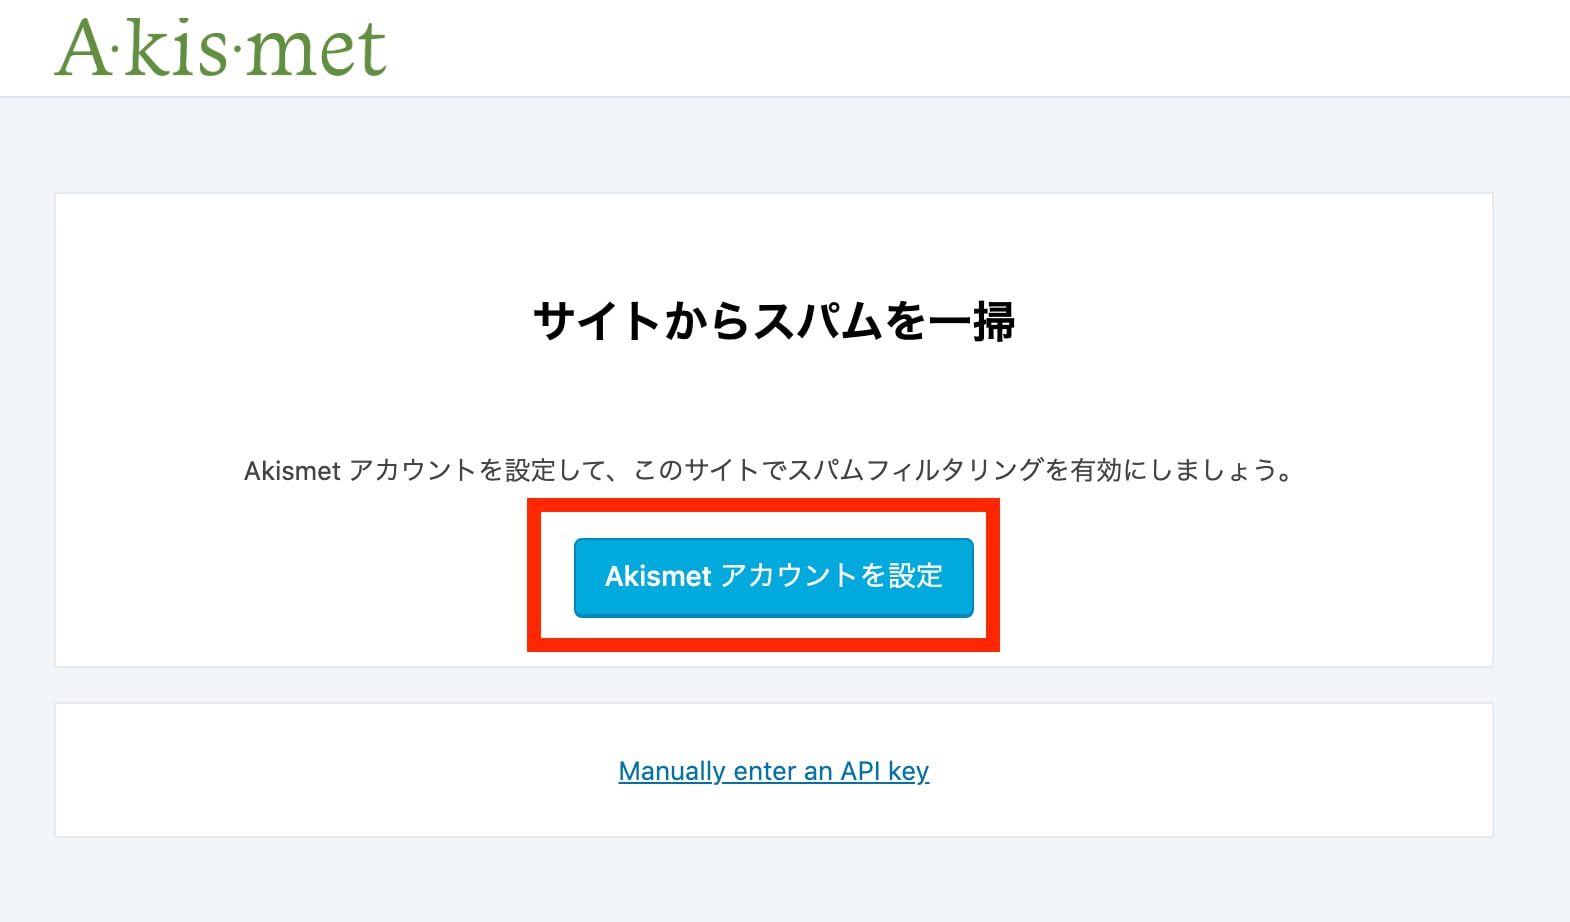 Akismet英語で日本語表記されない アカウント設定 Apiキー取得方法を解説 Ayumi S Free Life B Method